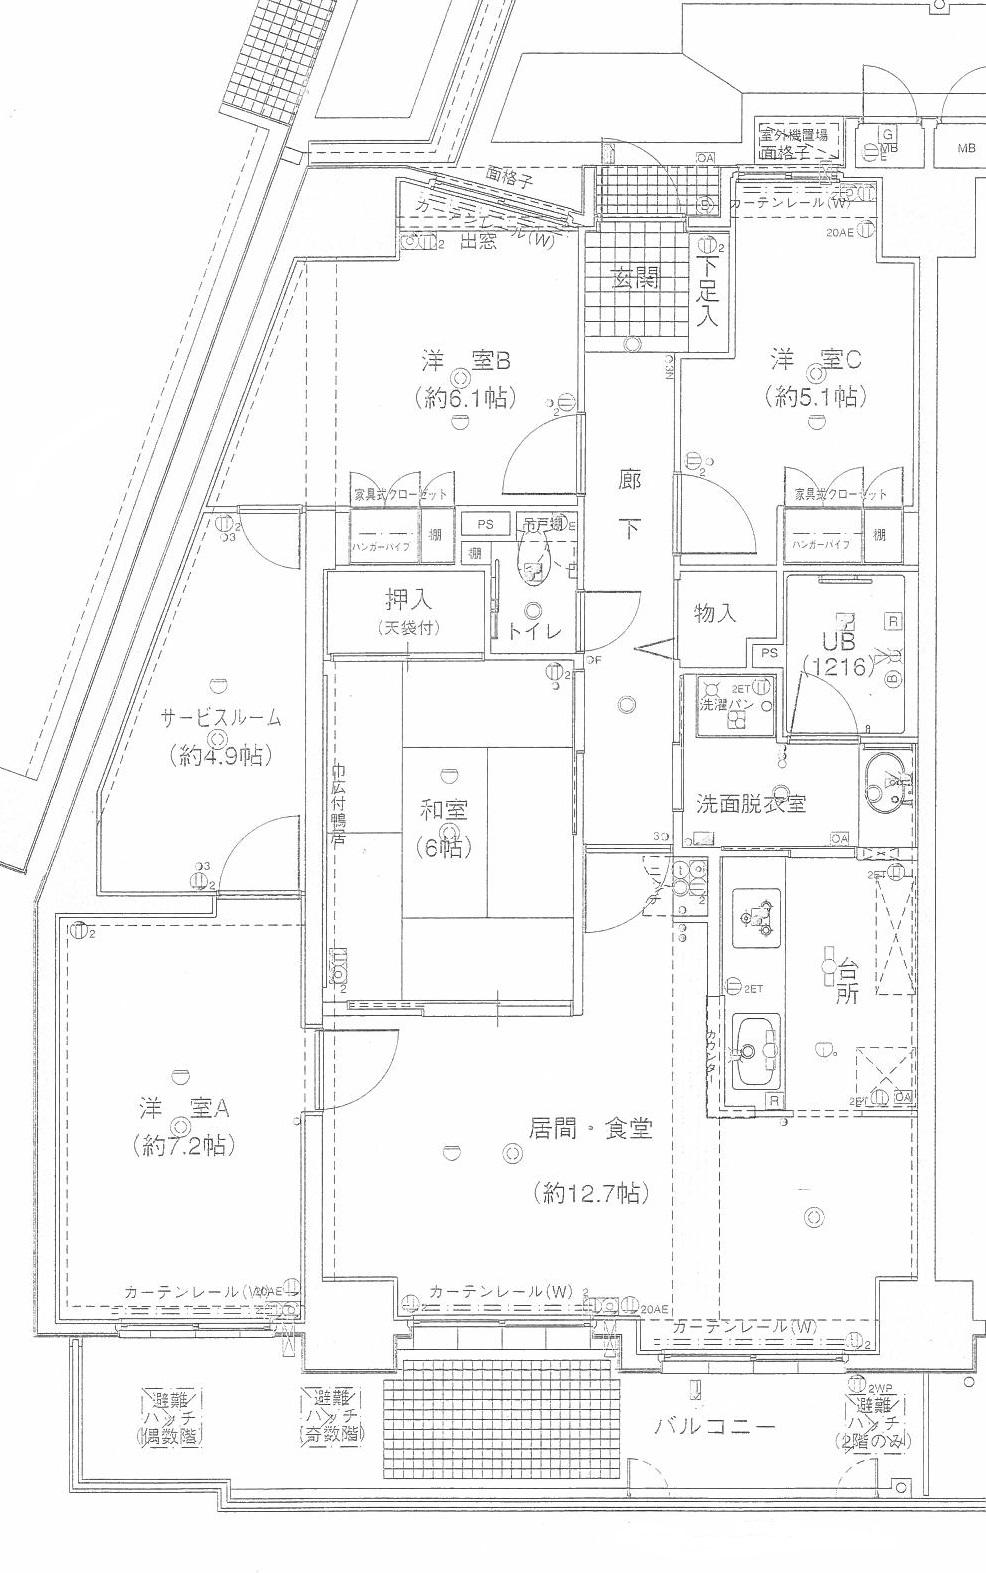 Floor plan. 4LDK + S (storeroom), Price 19,800,000 yen, Occupied area 94.11 sq m , Balcony area 14.05 sq m